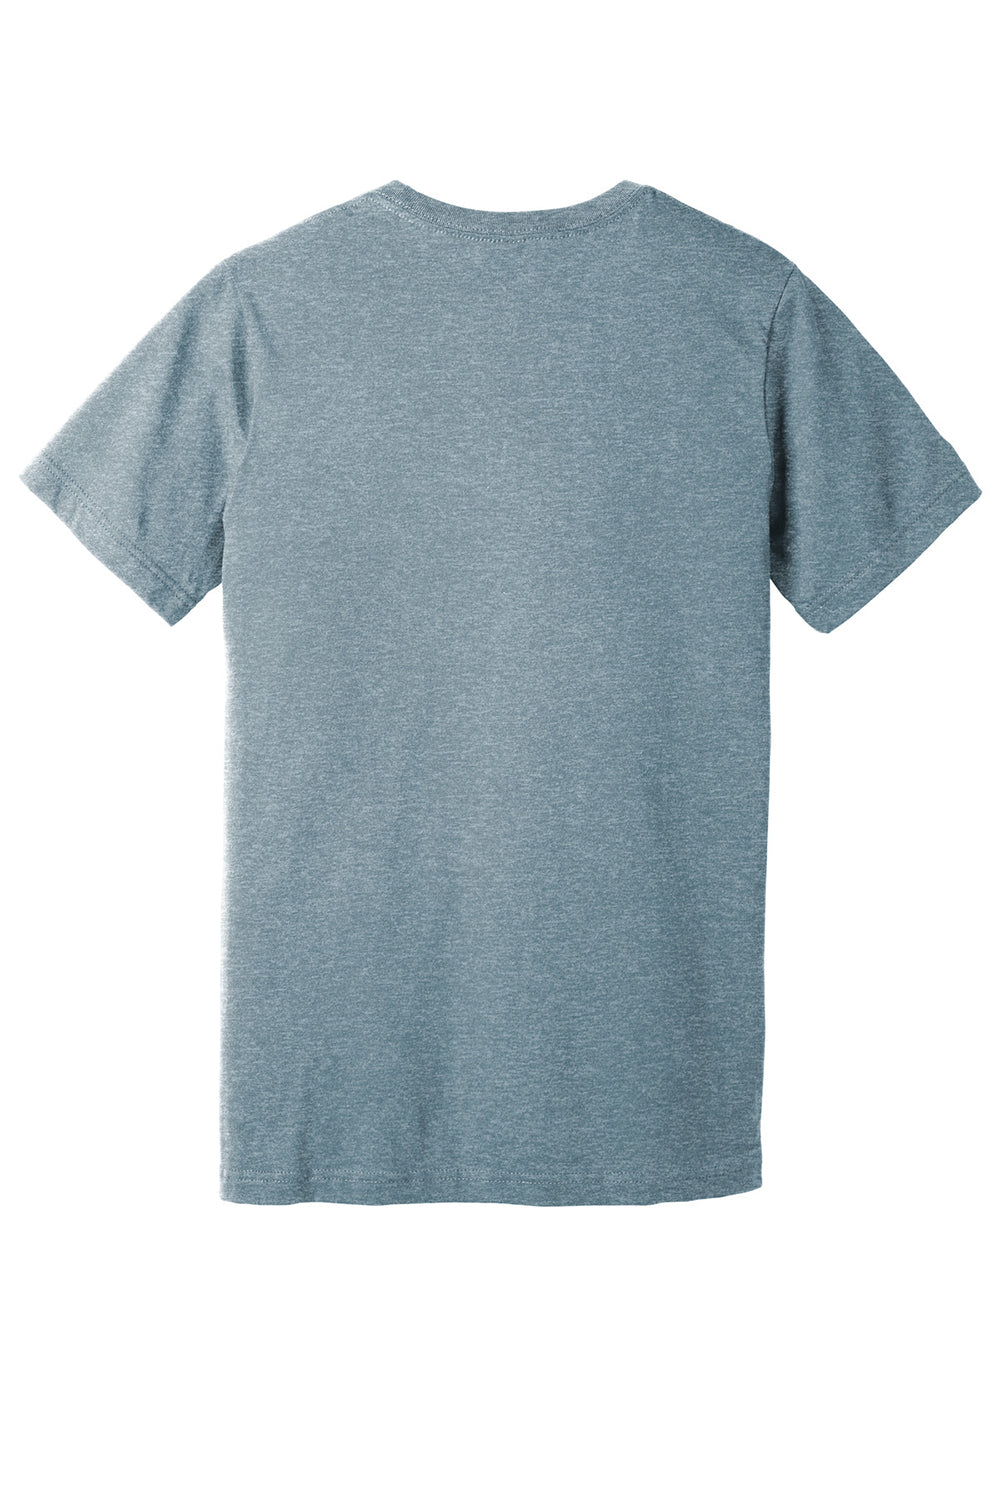 Bella + Canvas BC3005CVC Mens CVC Short Sleeve V-Neck T-Shirt Heather Slate Blue Flat Back